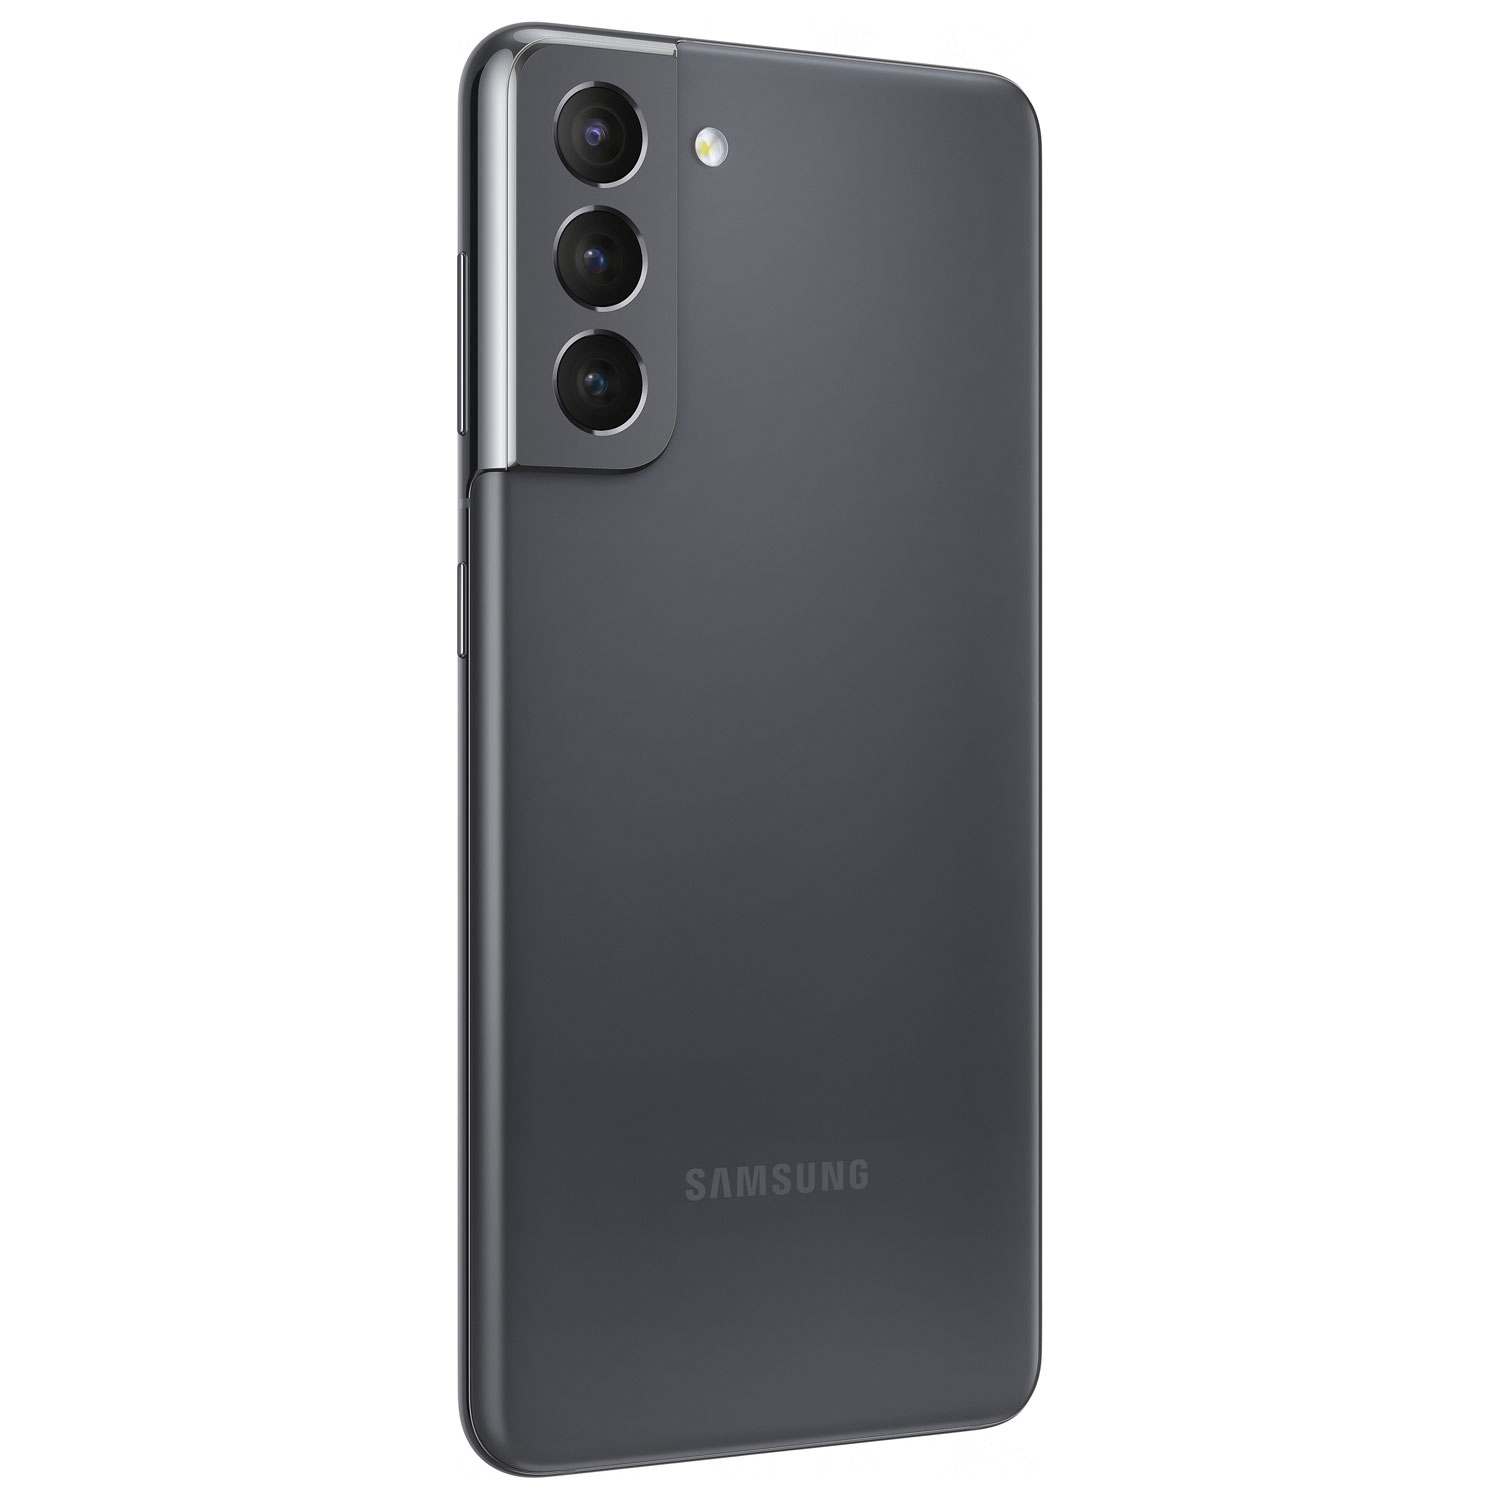 Samsung Galaxy S21 5G 128GB - Phantom Grey - Unlocked - New | Best